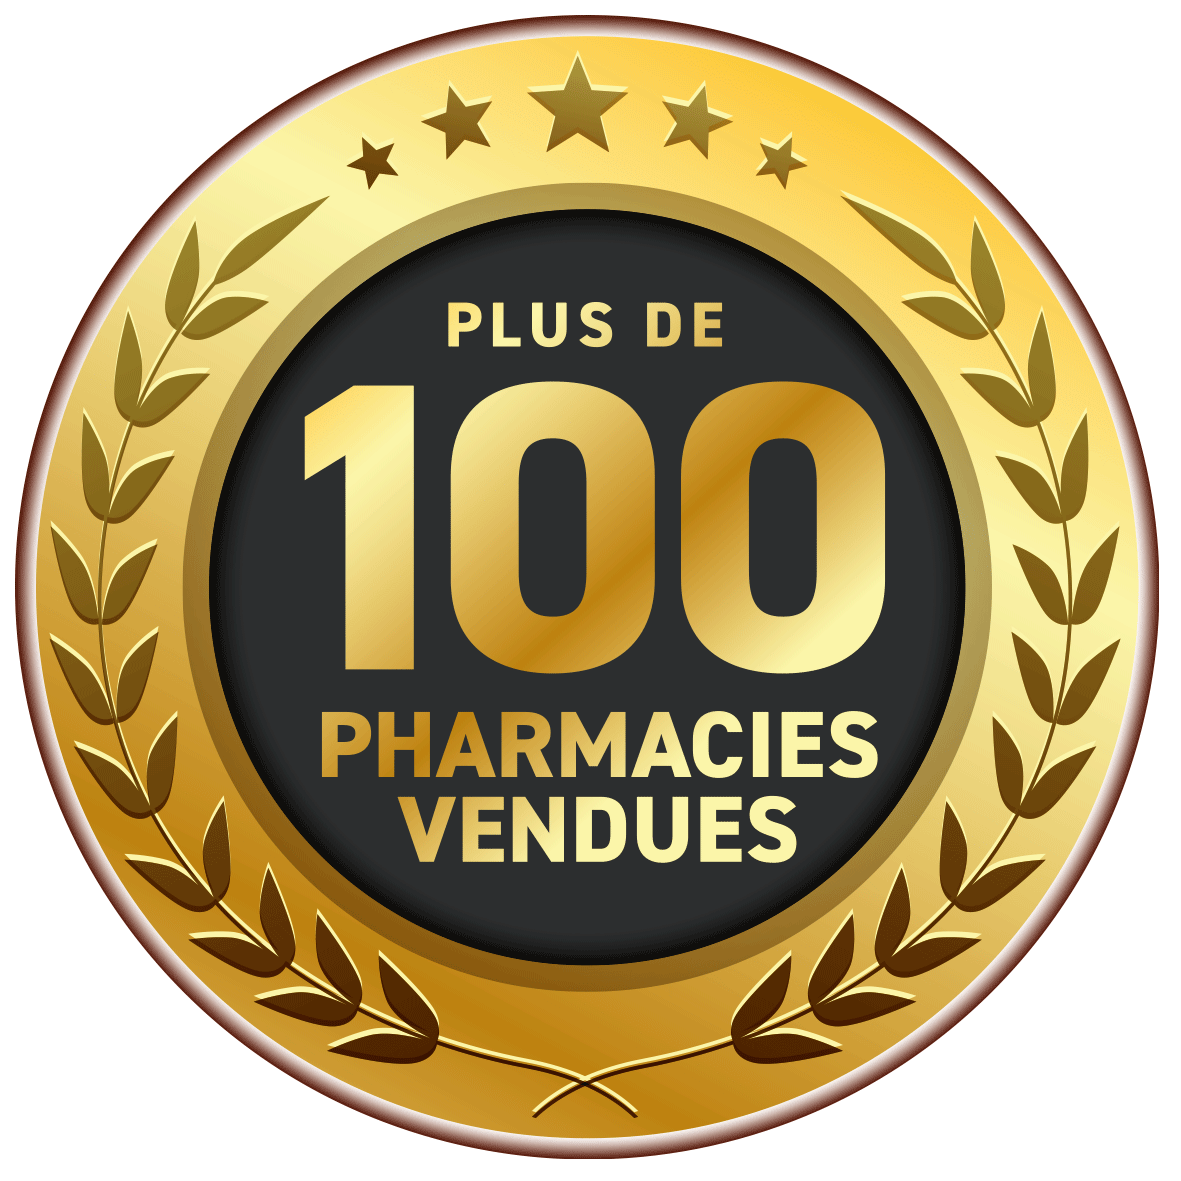 Plus de 100 pharmacies vendues